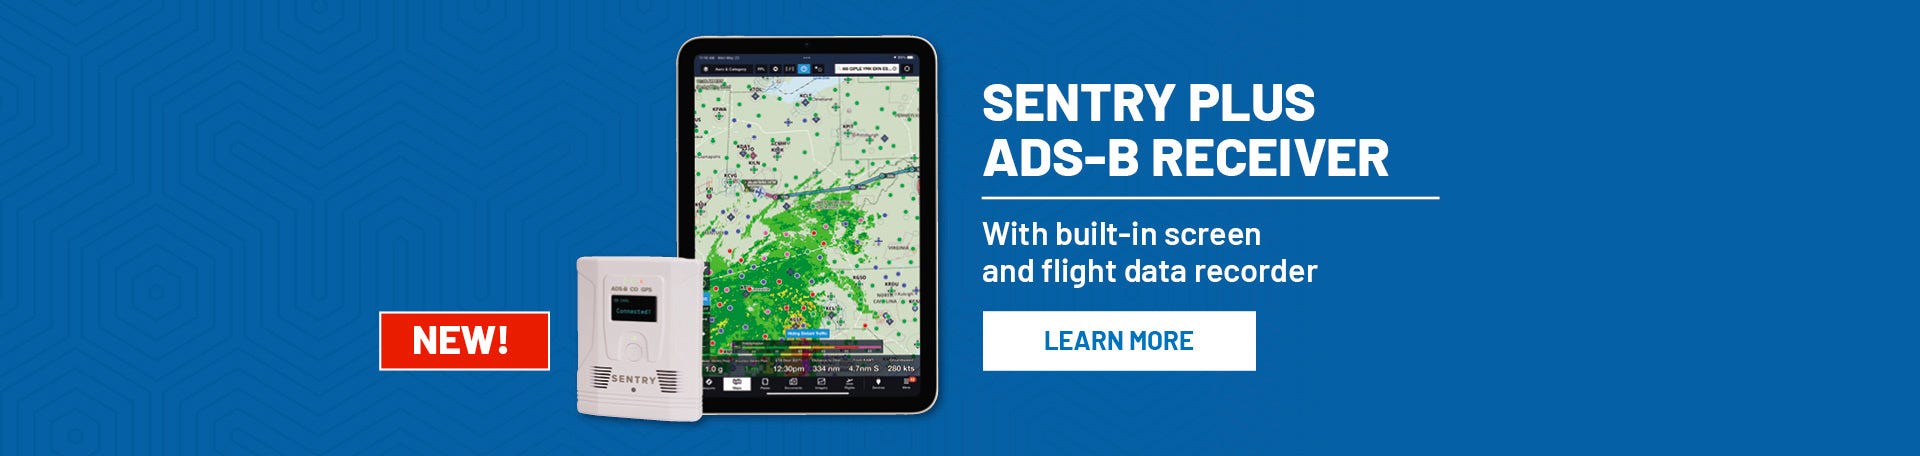 NEW - Sentry Plus ADSB Receiver